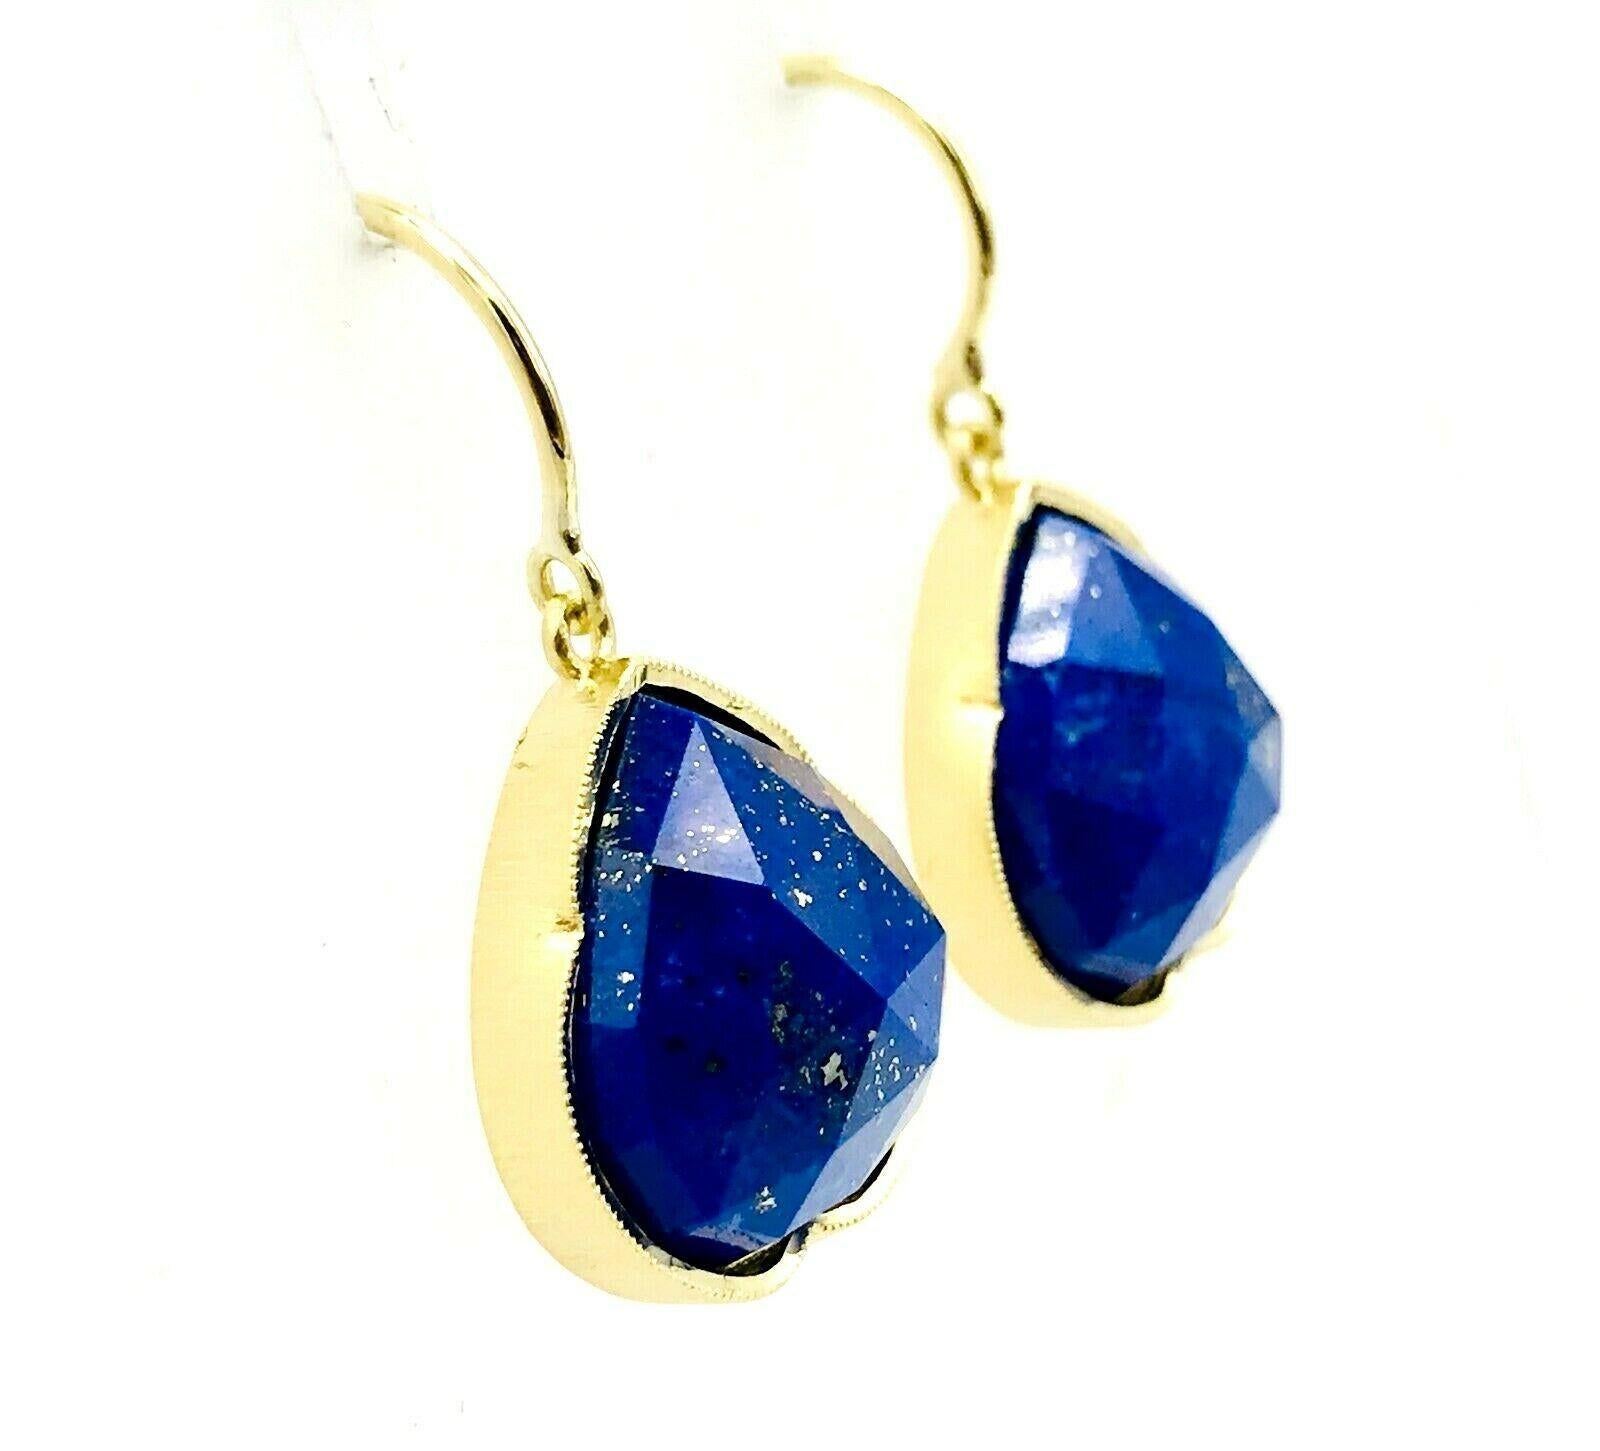 irene neuwirth turquoise earrings